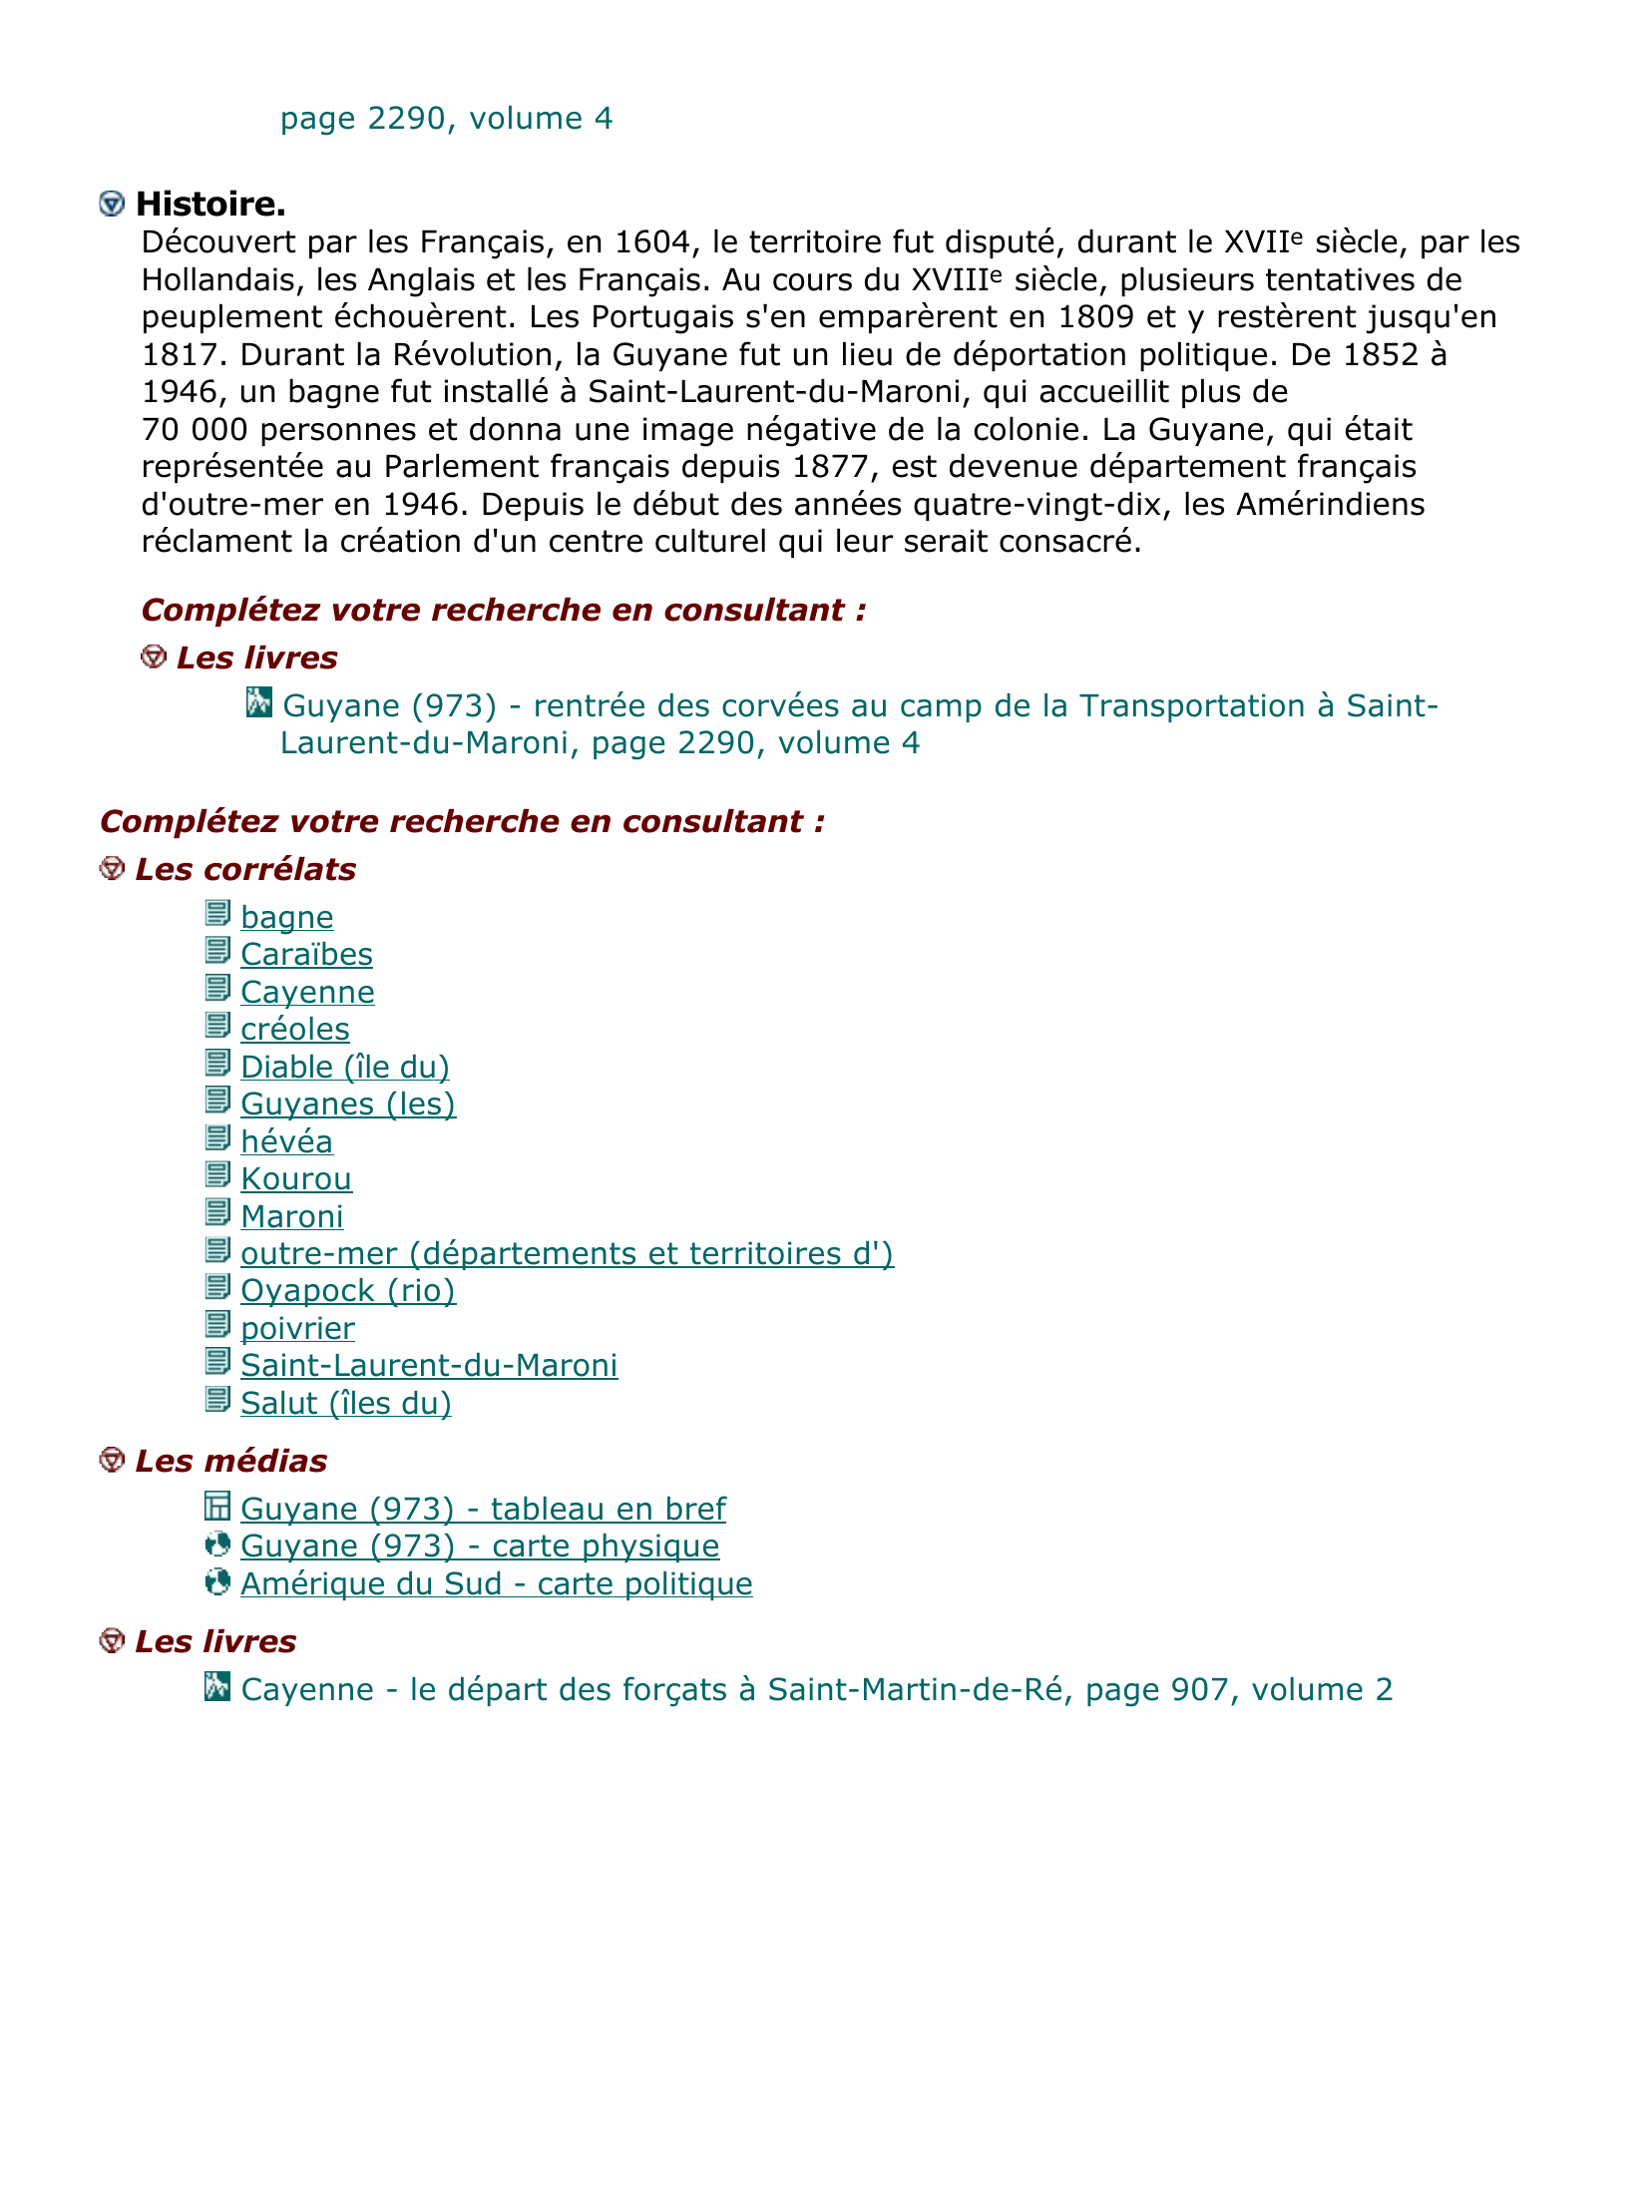 Prévisualisation du document Guyane (973).